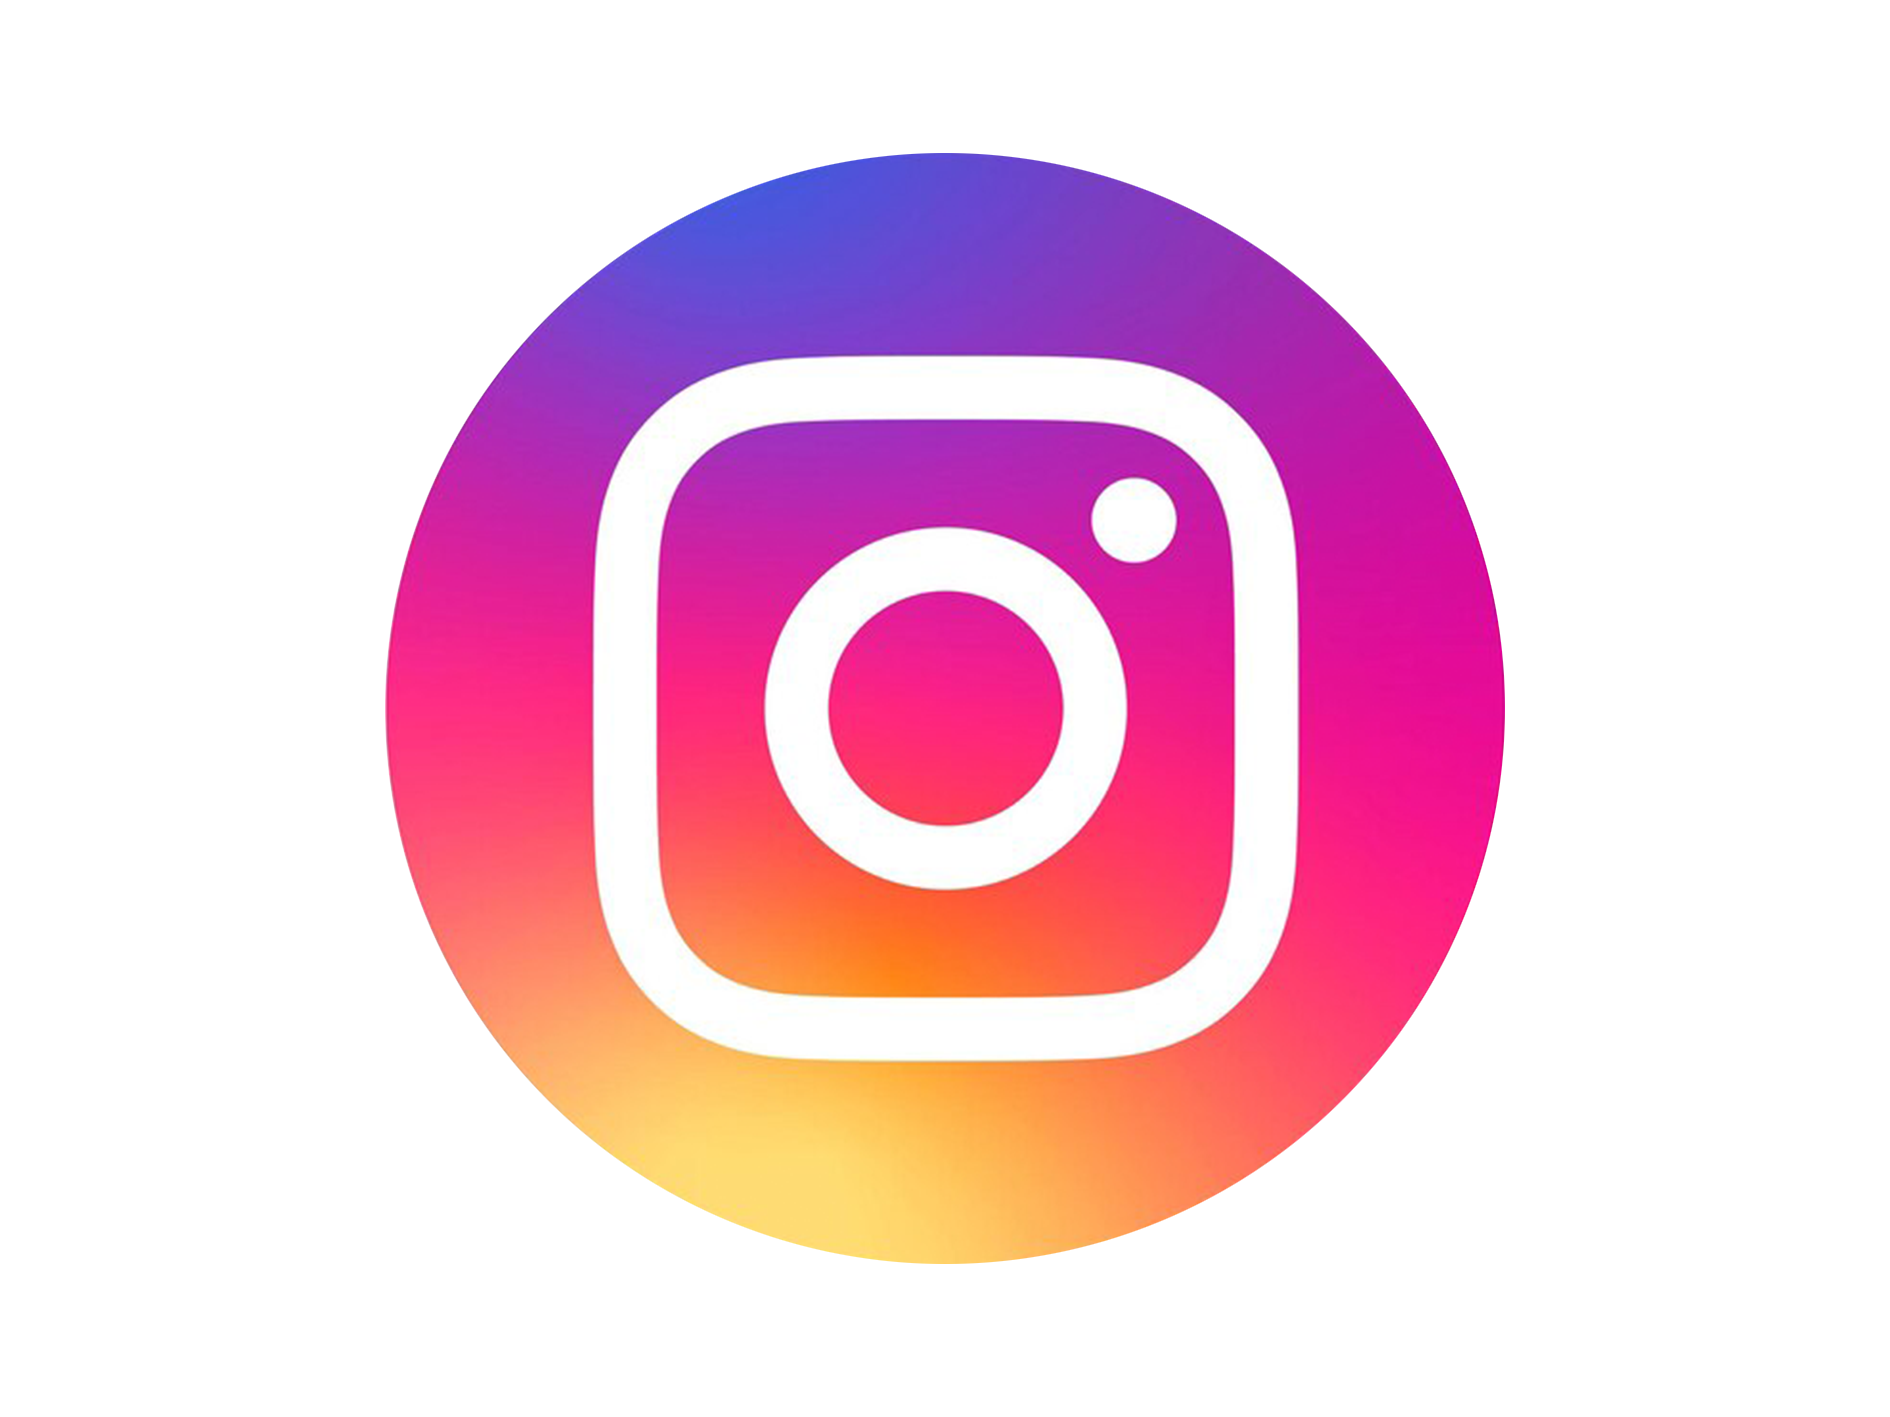 Circular Instagram logo